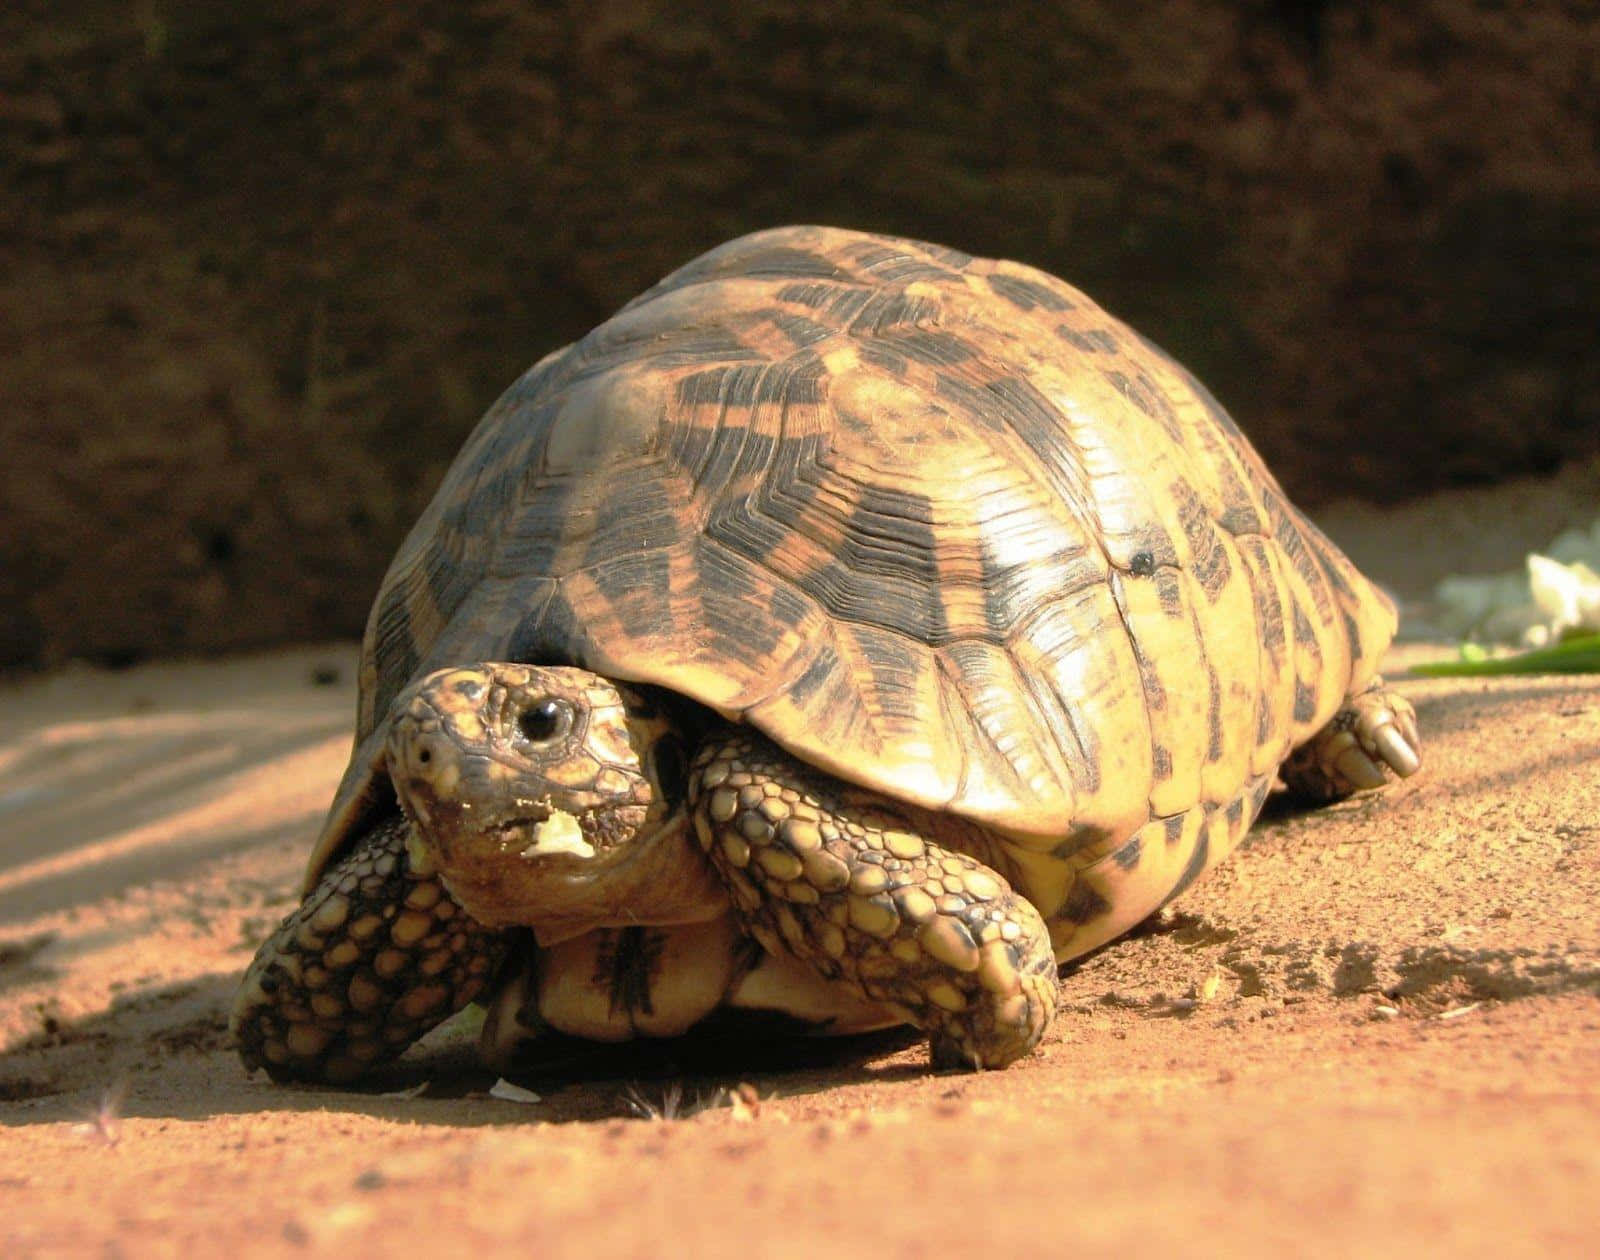 Beautiful Scenery of a Tortoise Enjoying the Great Outdoors